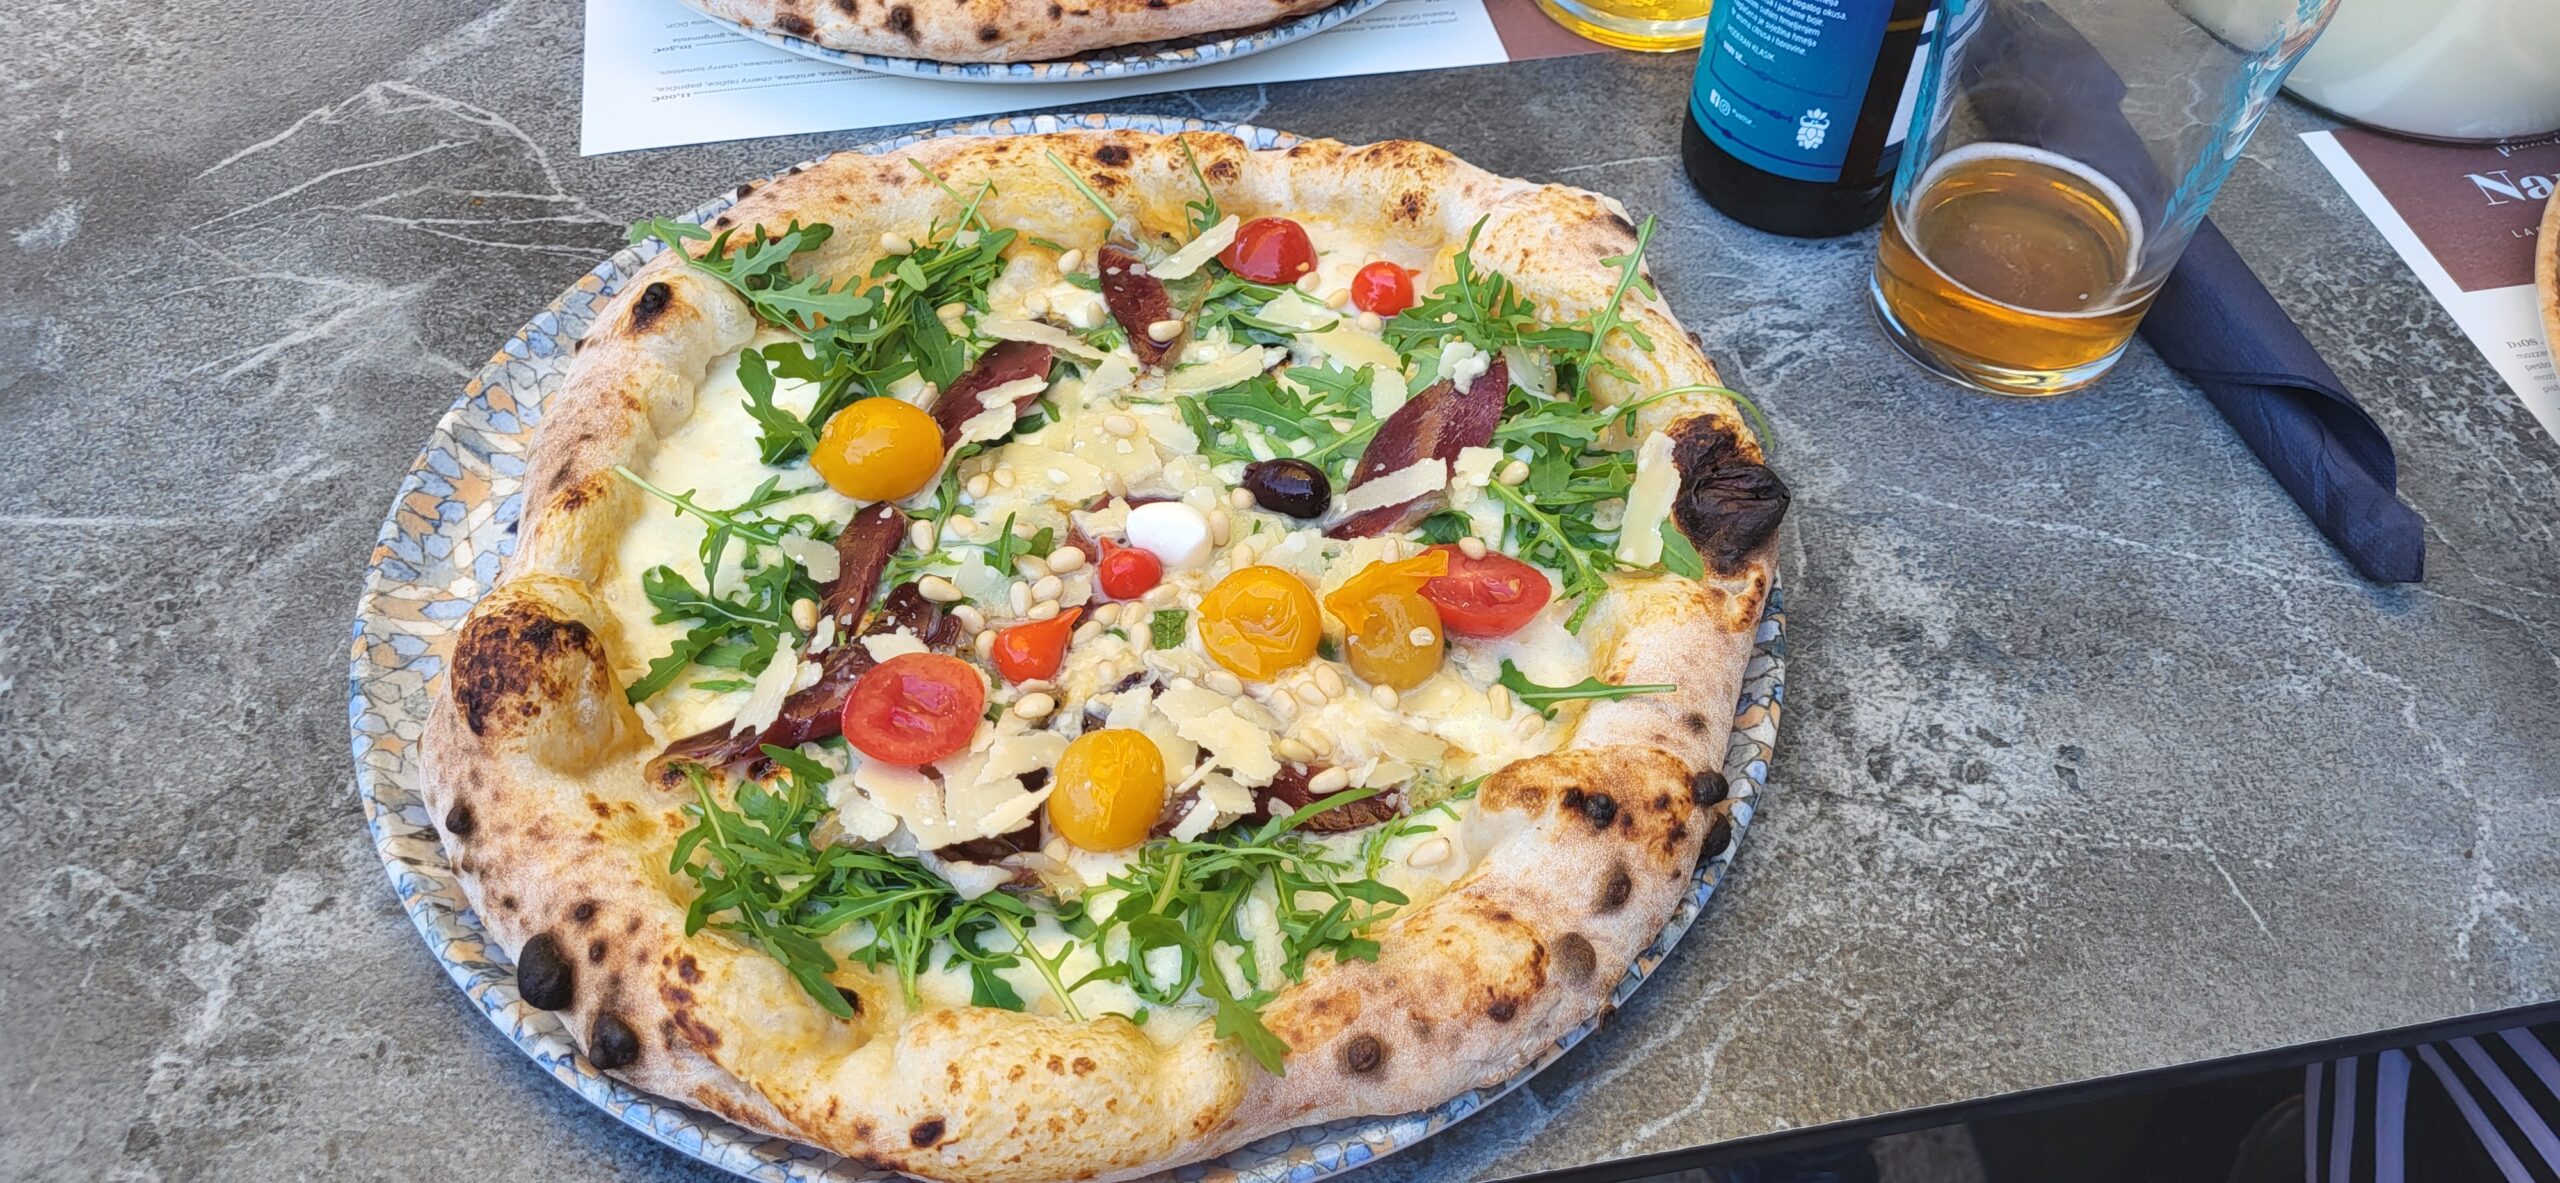 Pizze @ Pizzeria Napoli, Labin